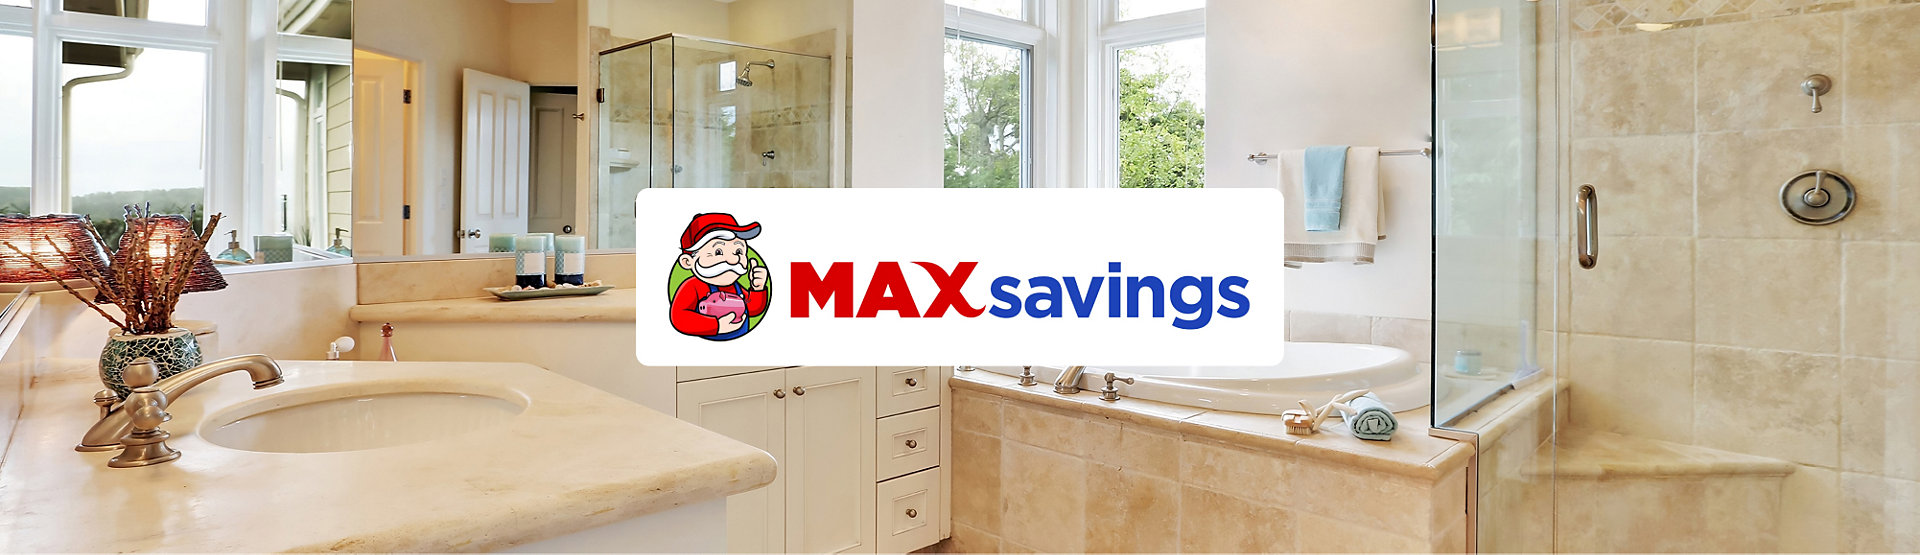 Max Savings